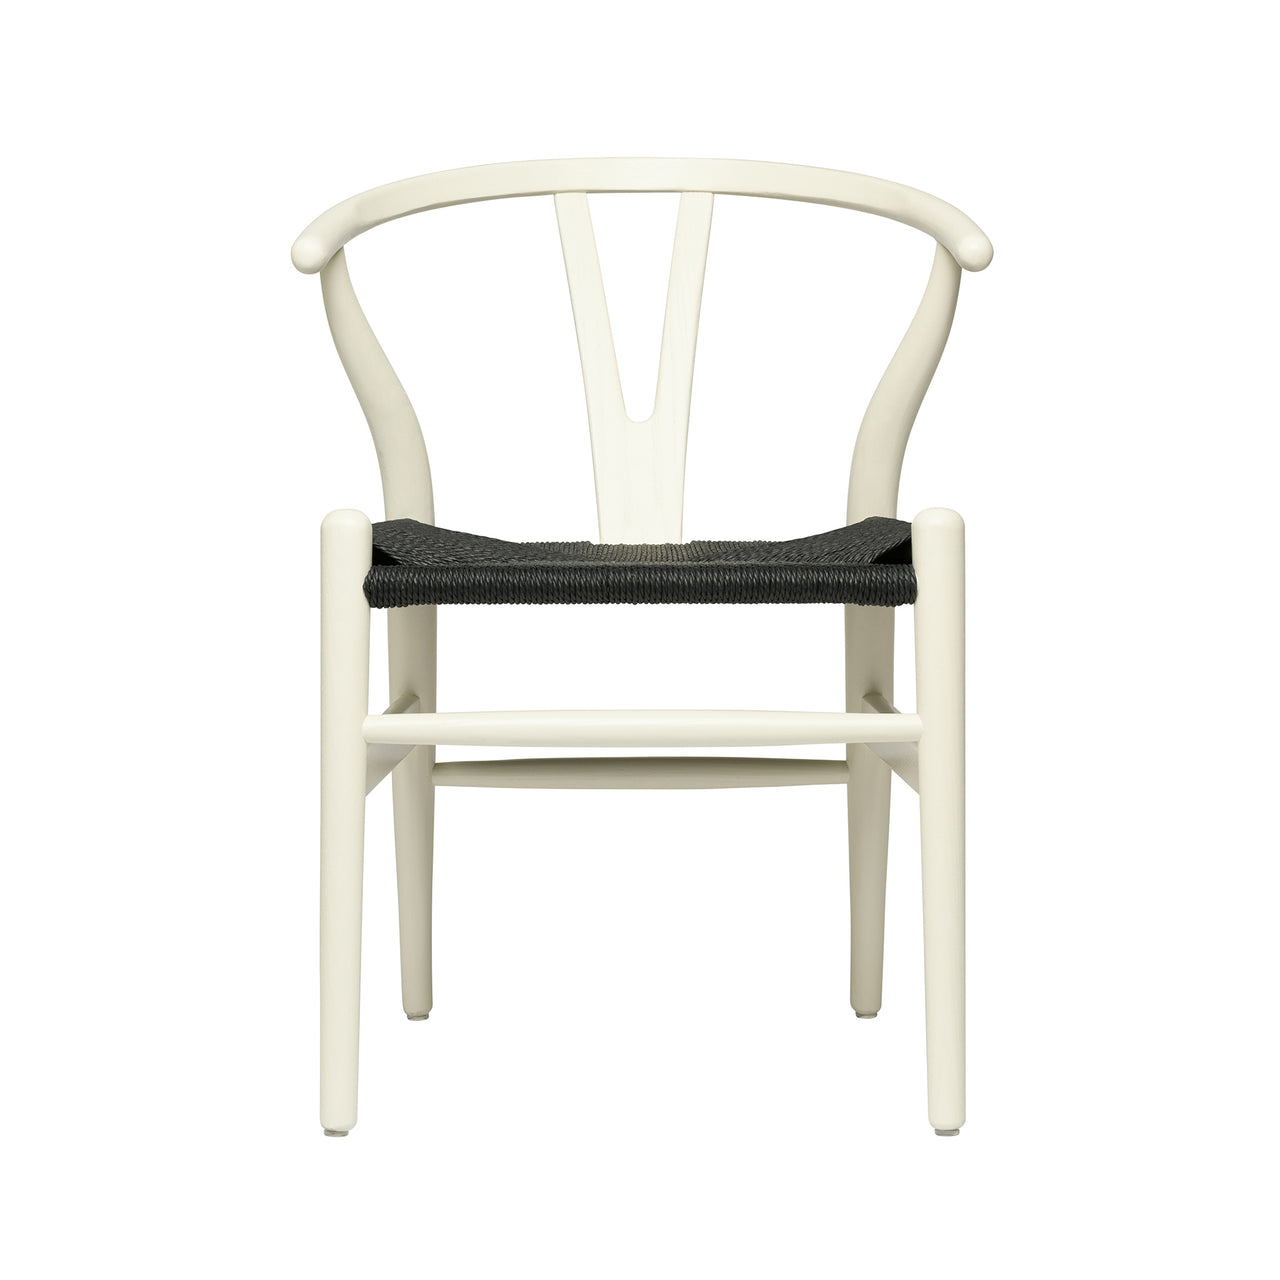 Wishbone Chair (Rustic White/Black Woven Cord)